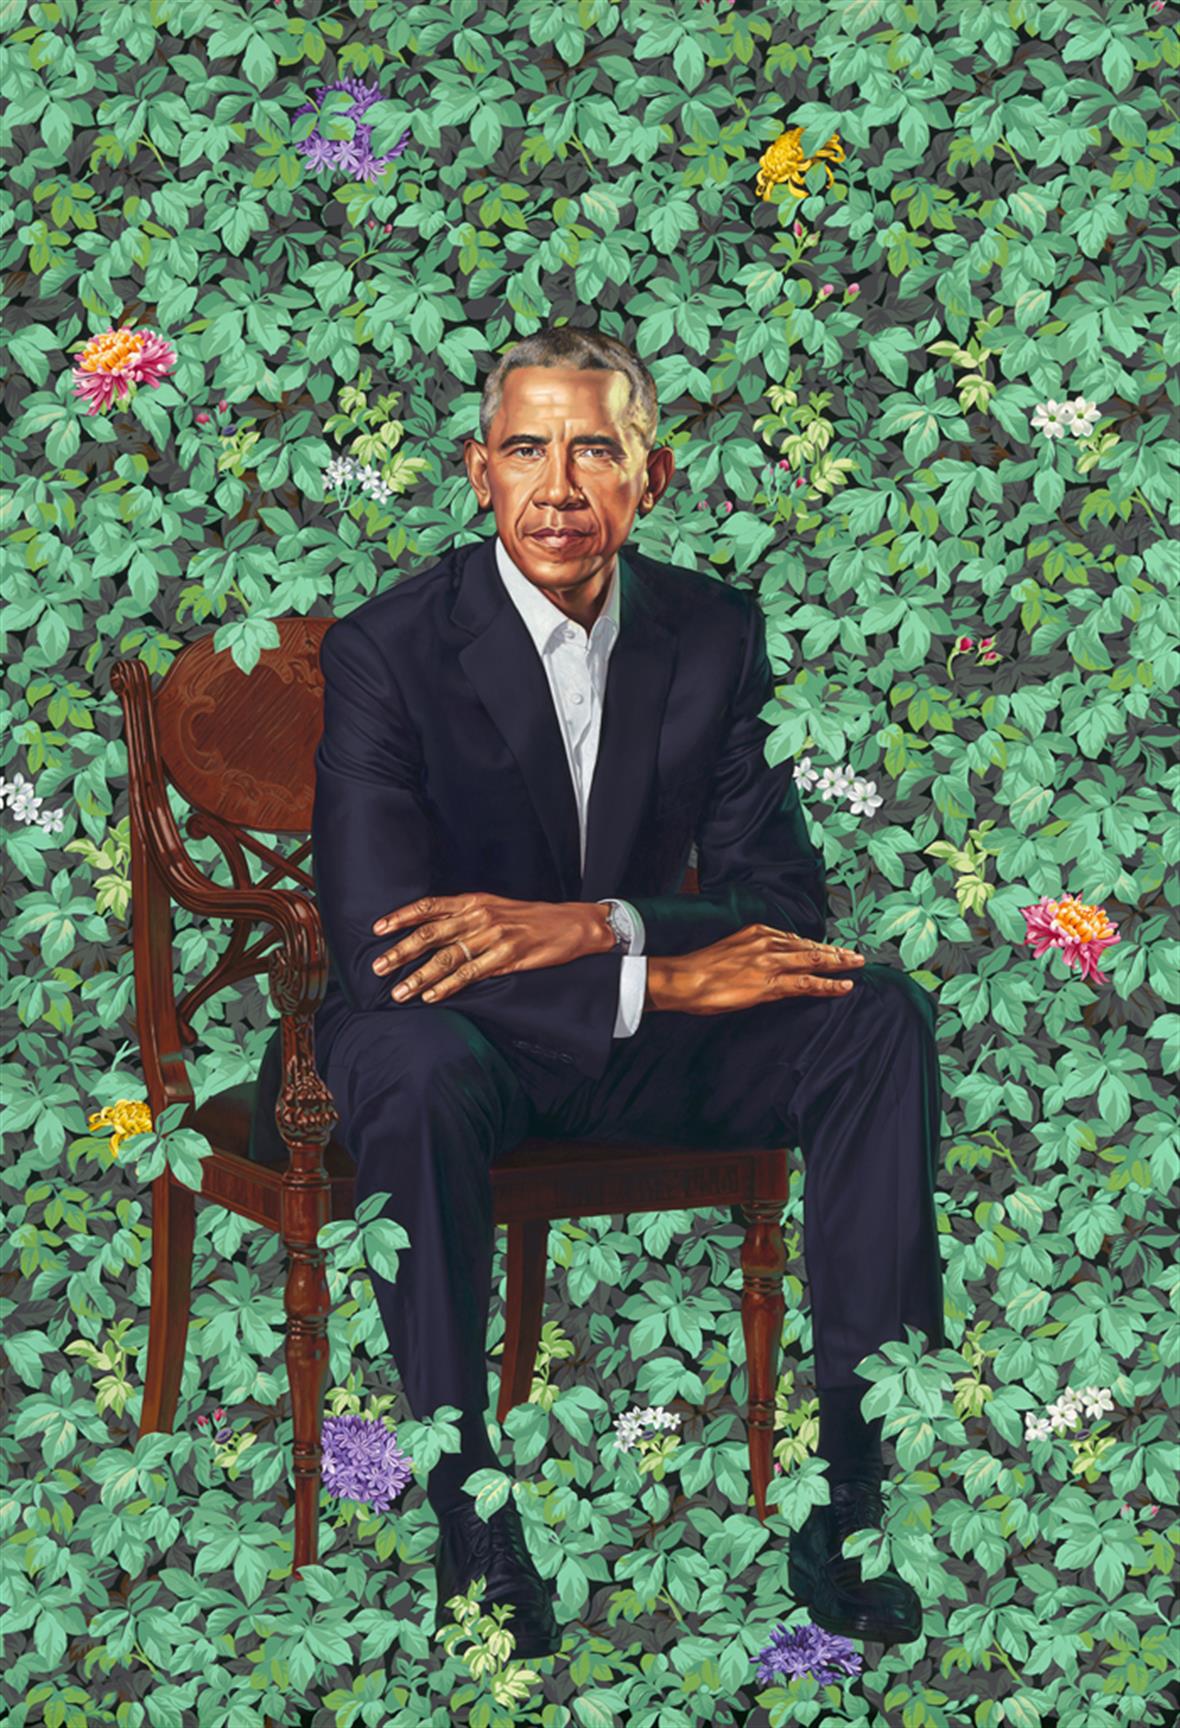 Kehinde Wiley's portrait of Barack Obama